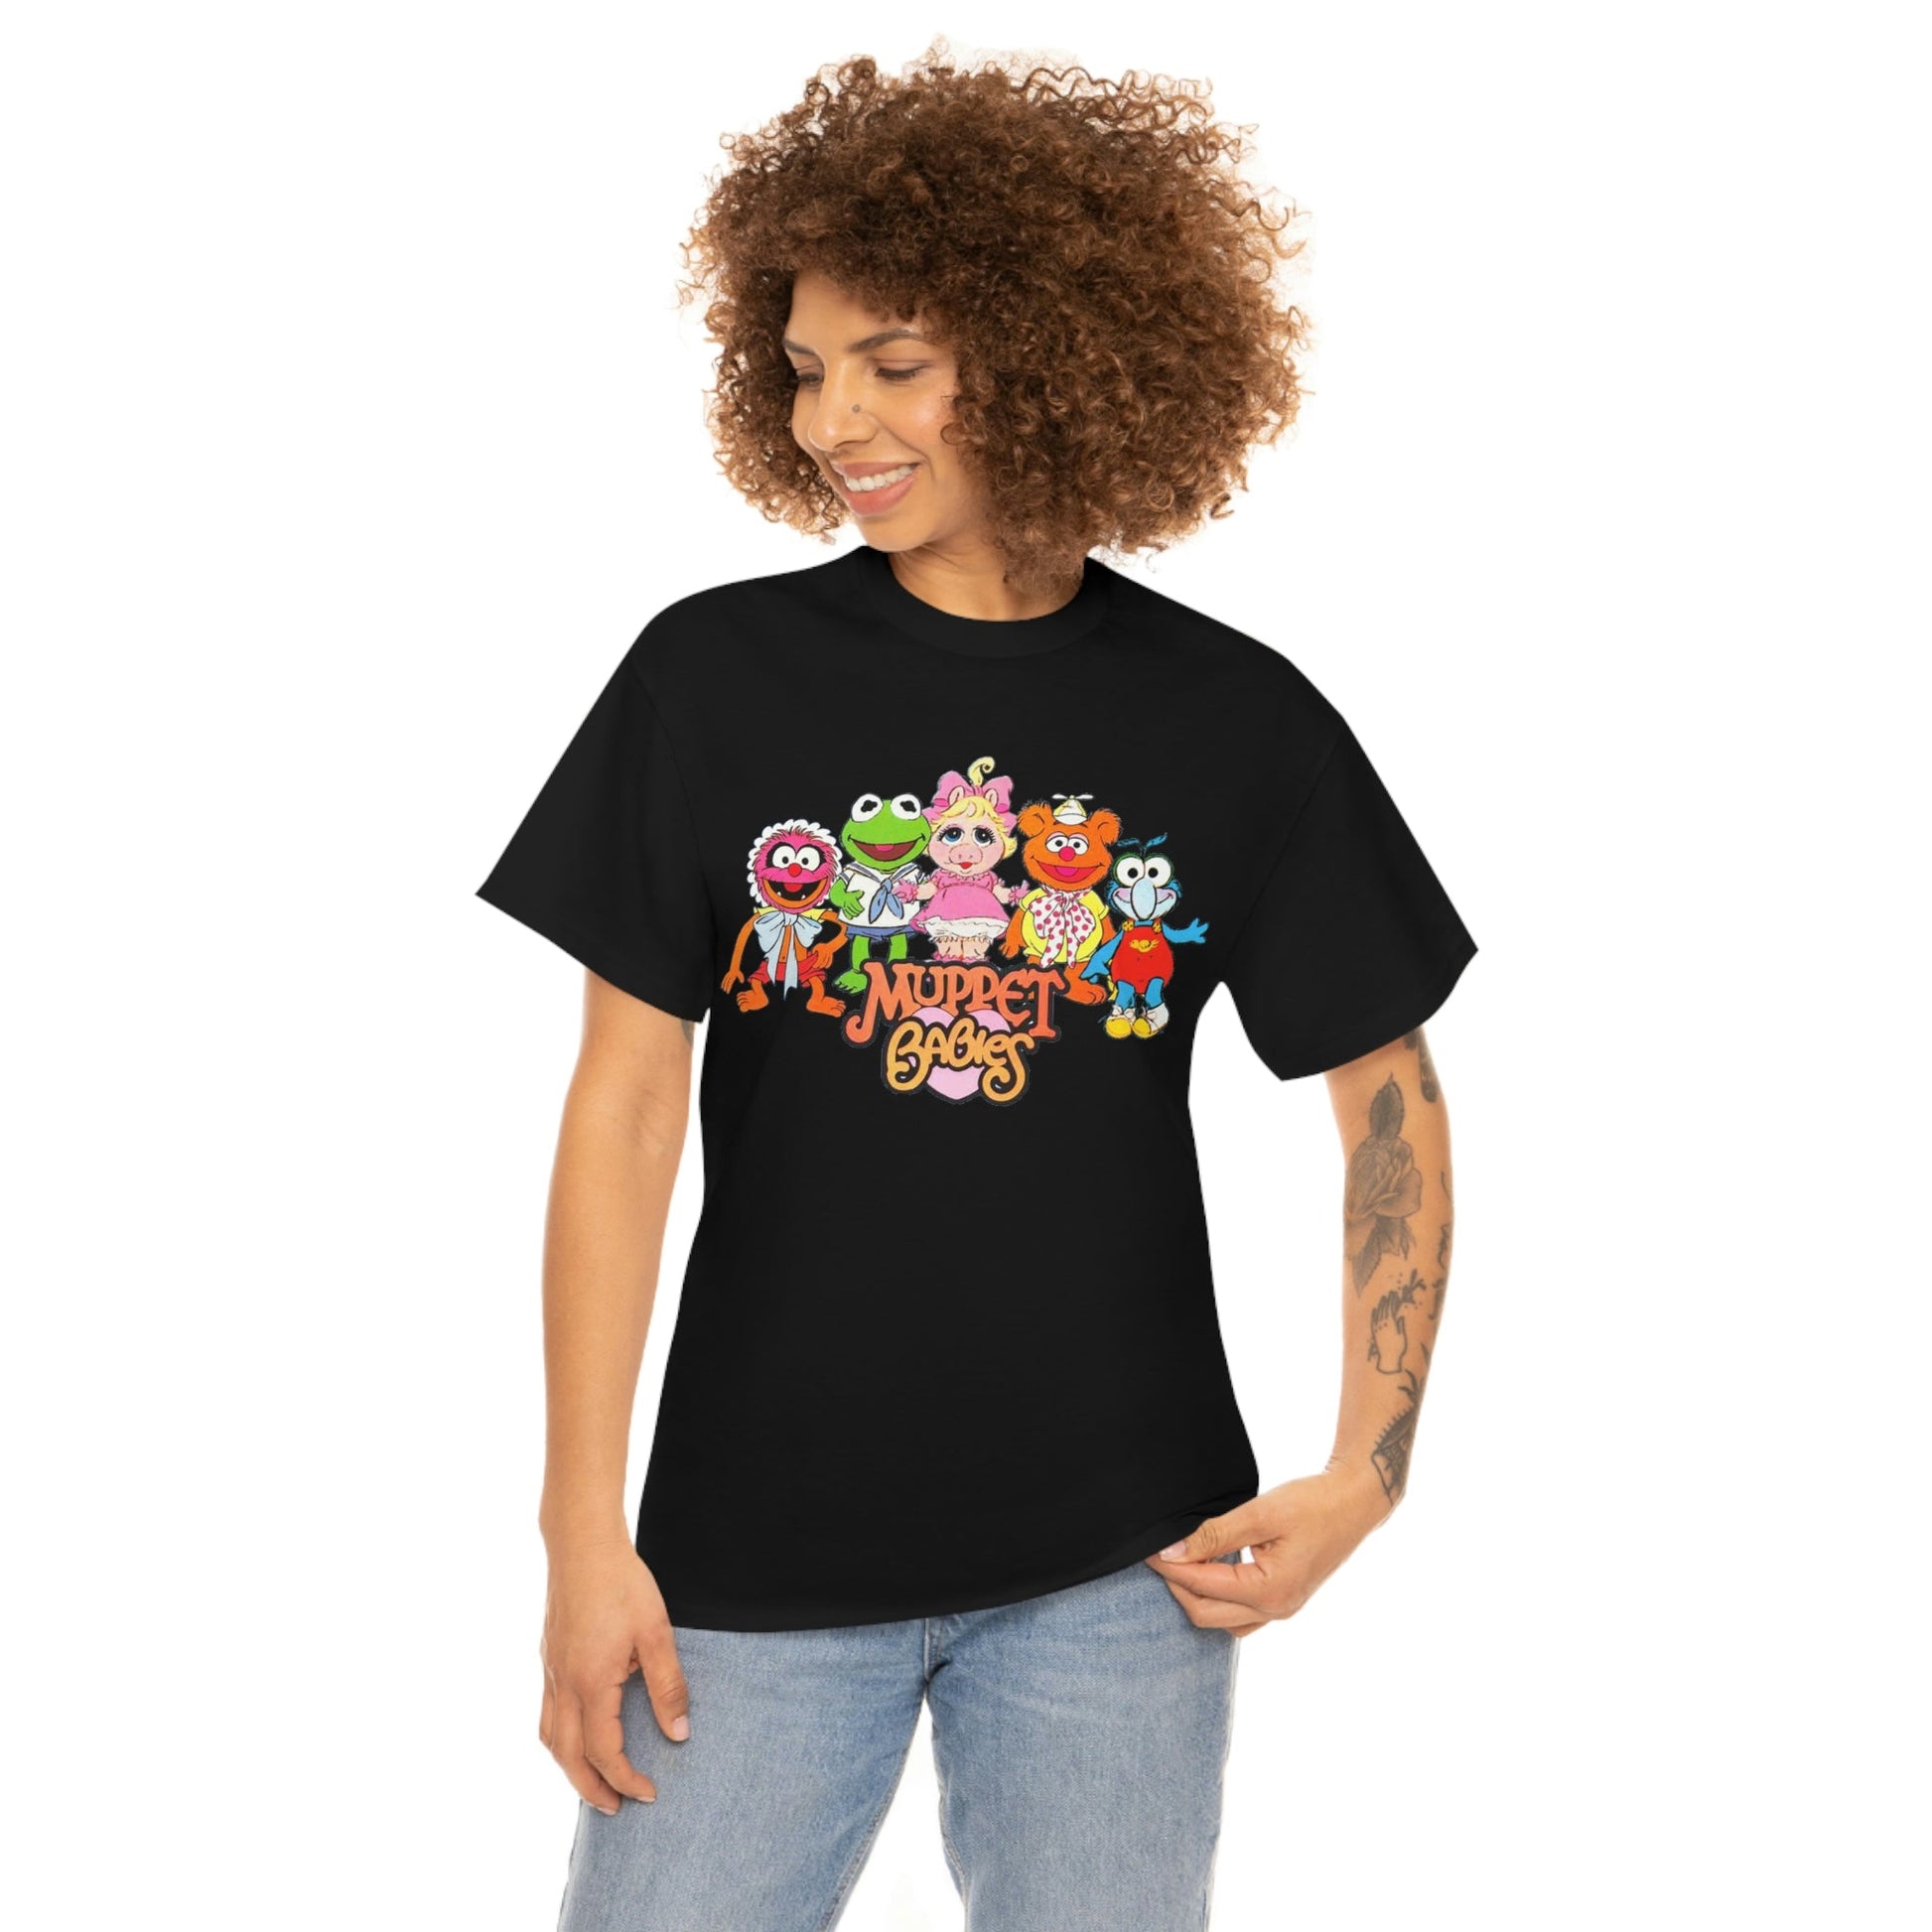 Muppet Babies T-Shirt - RetroTeeShop